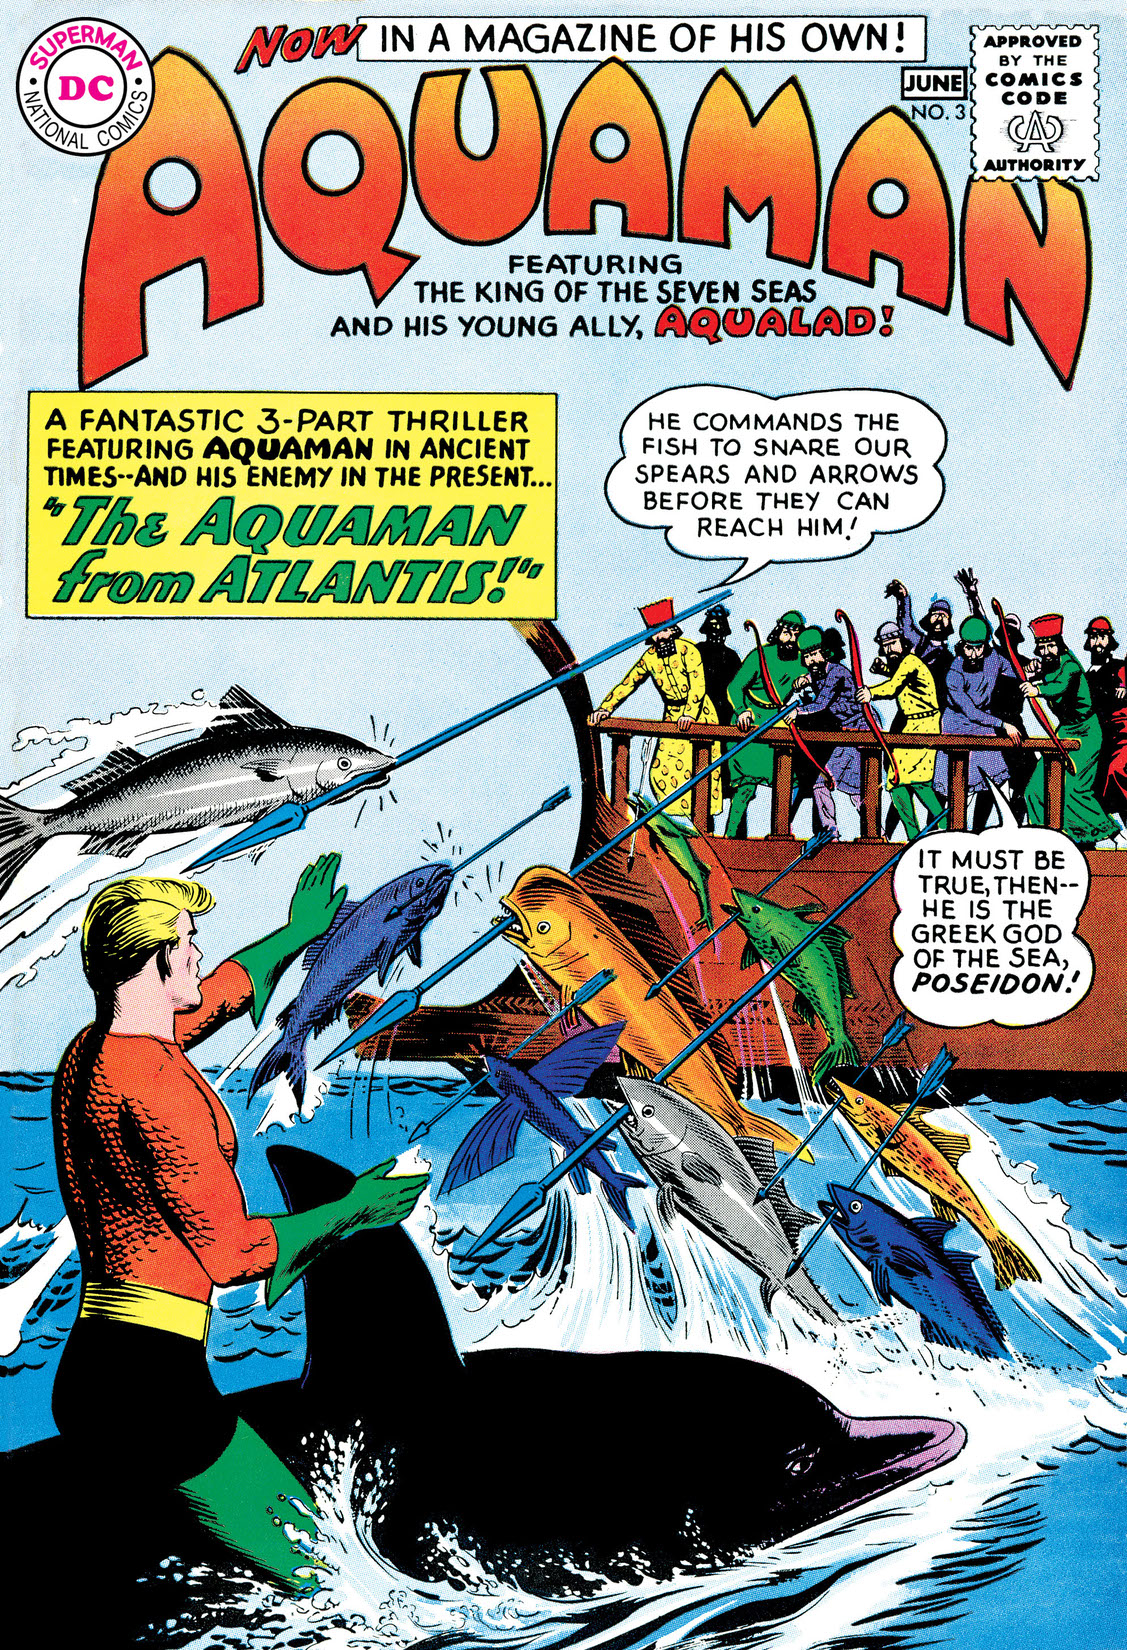 Aquaman (1962-) #3 preview images